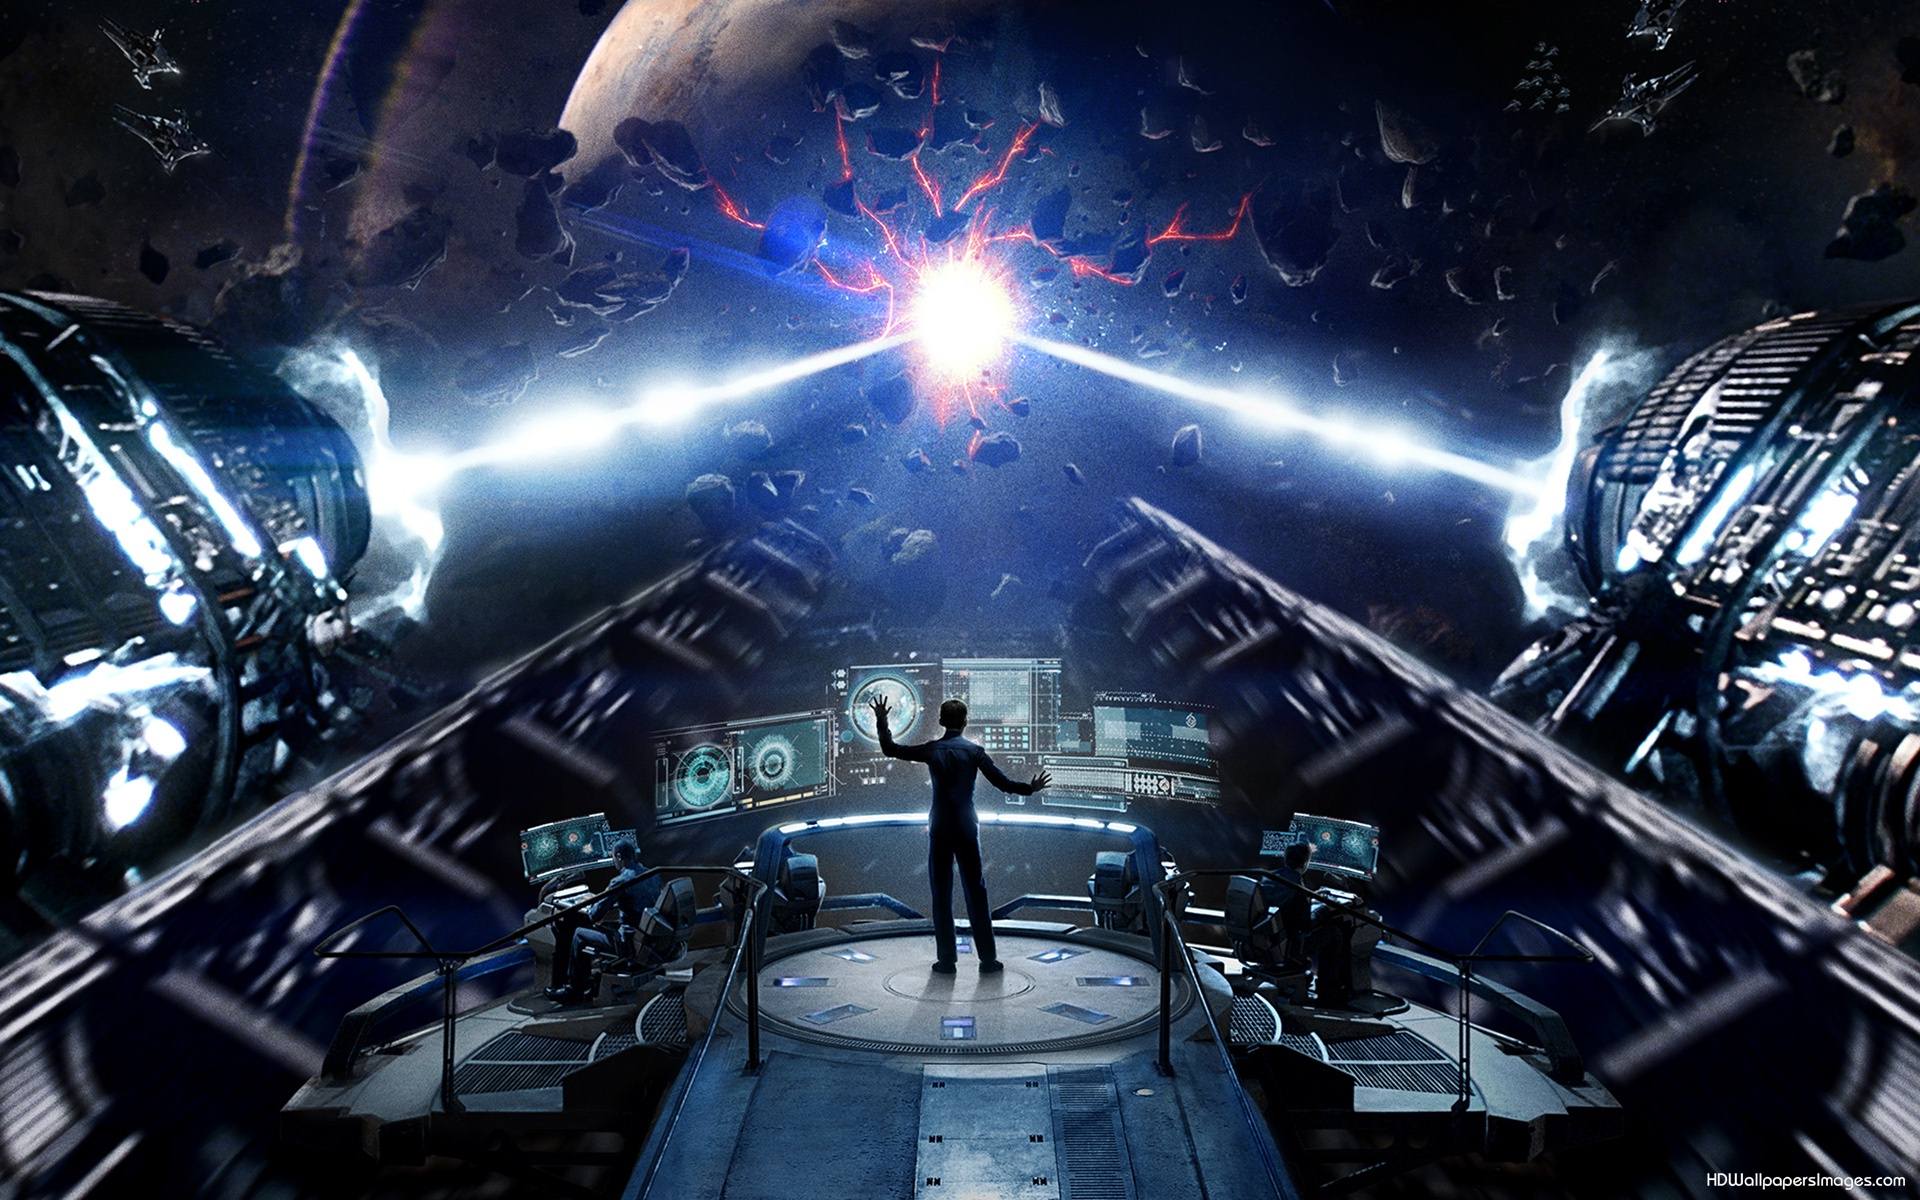 Ender (Asa Butterfield) in war games simulator in Ender's Game (2013)